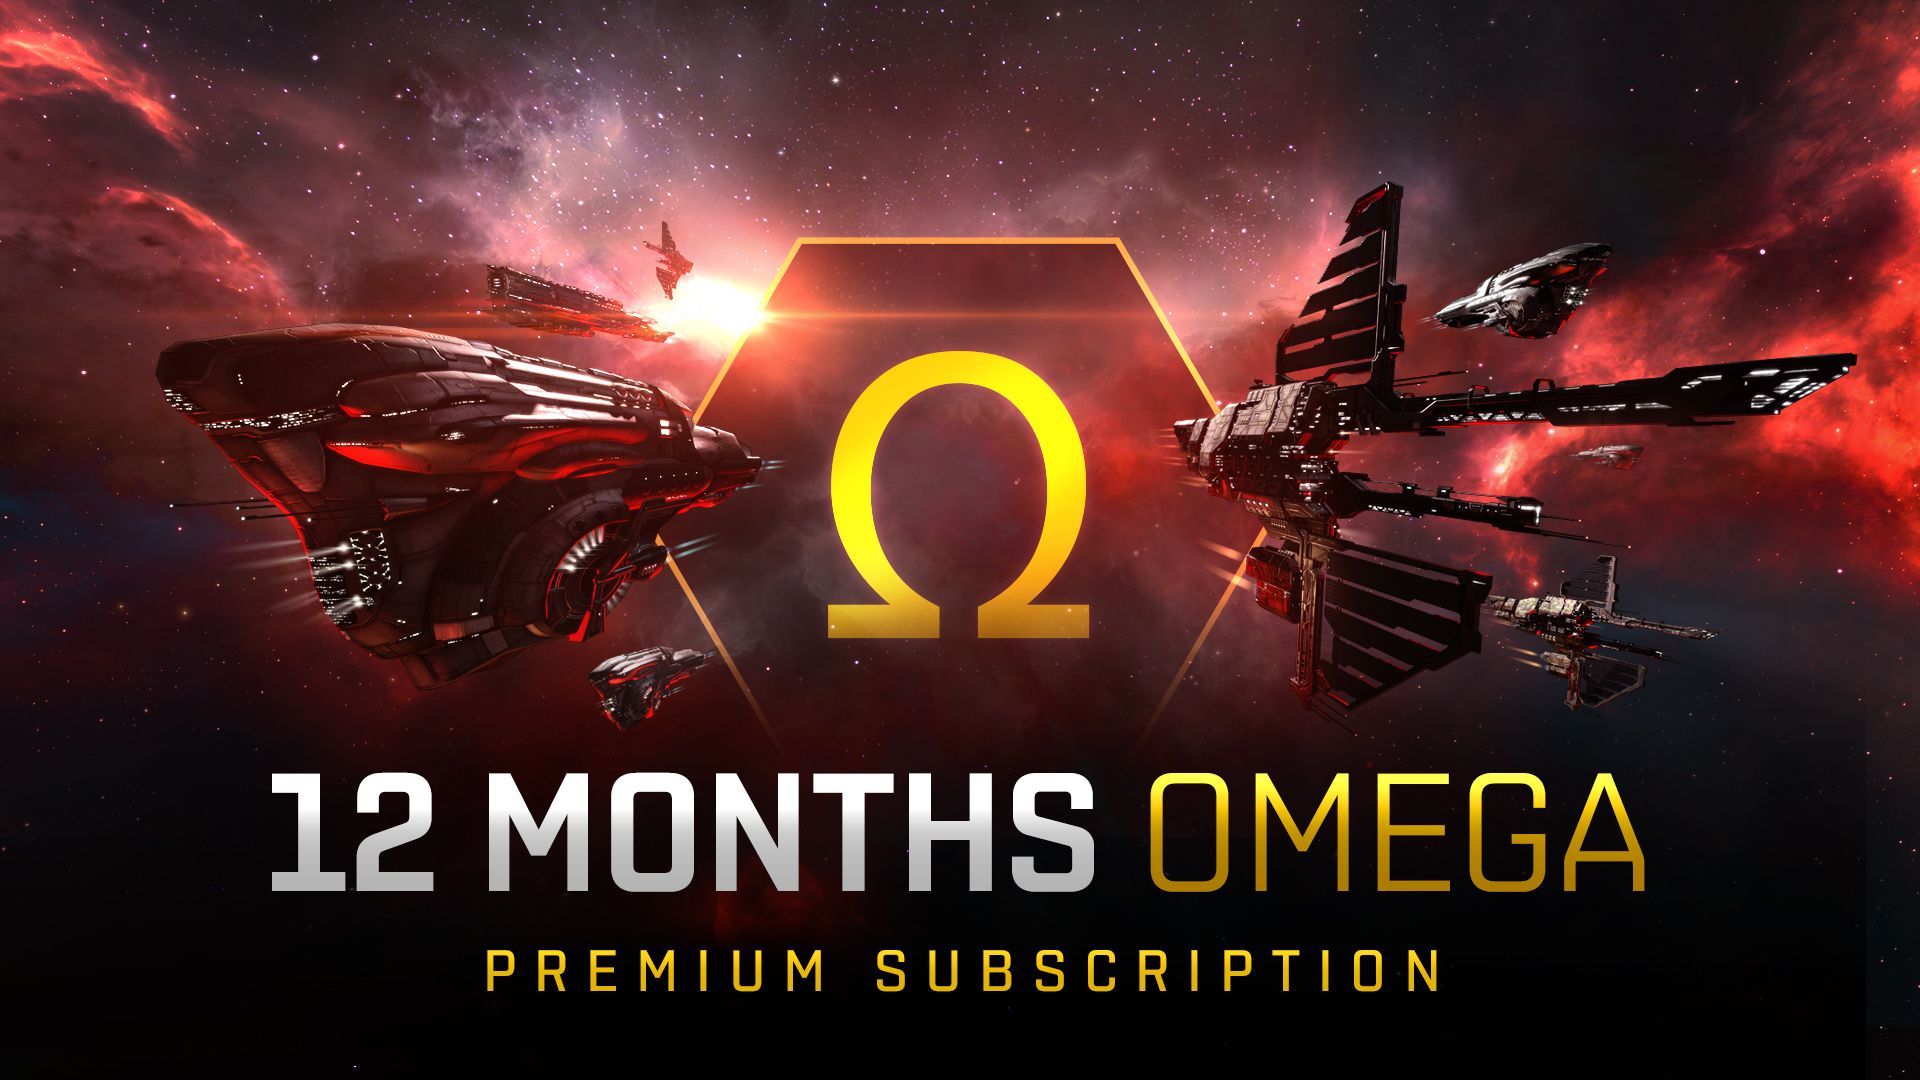 Eve Online 12 Month Omega Time